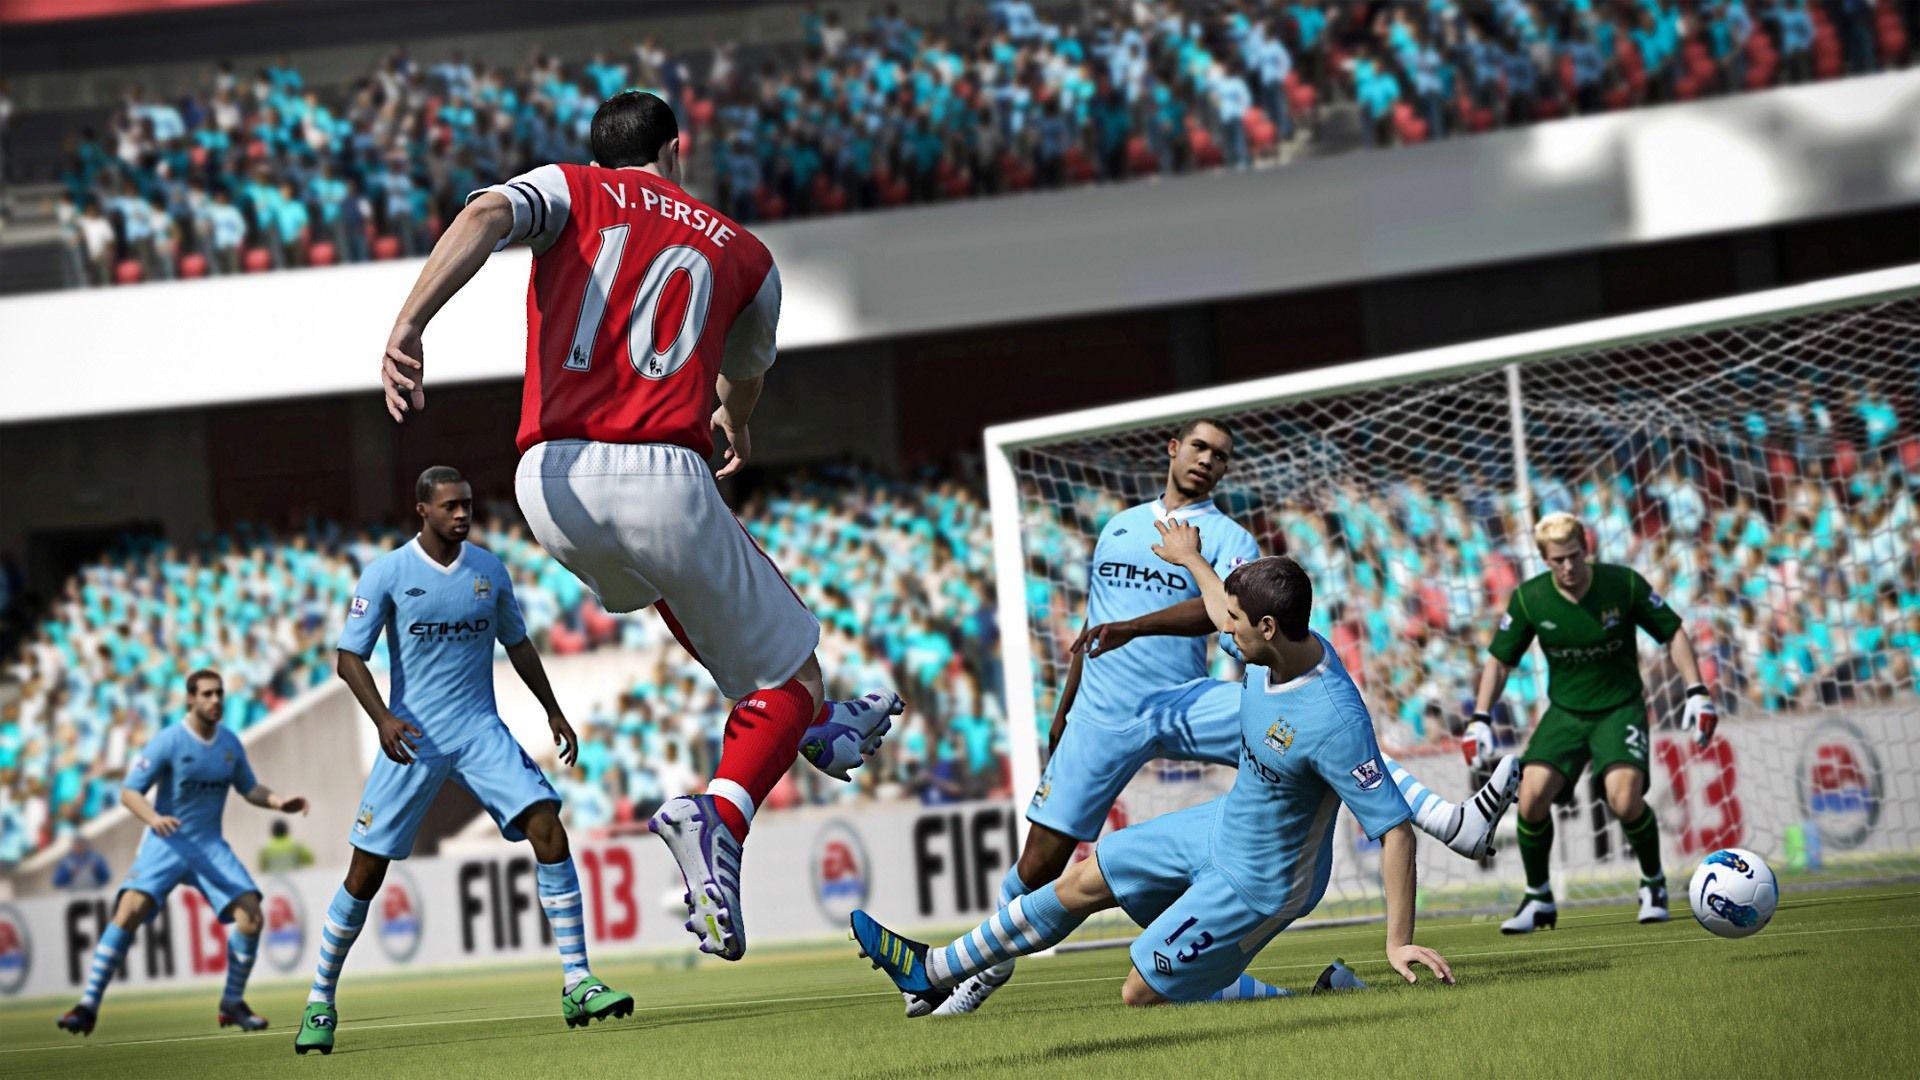 FIFA 18 Game Photo. Beautiful image HD Picture & Desktop